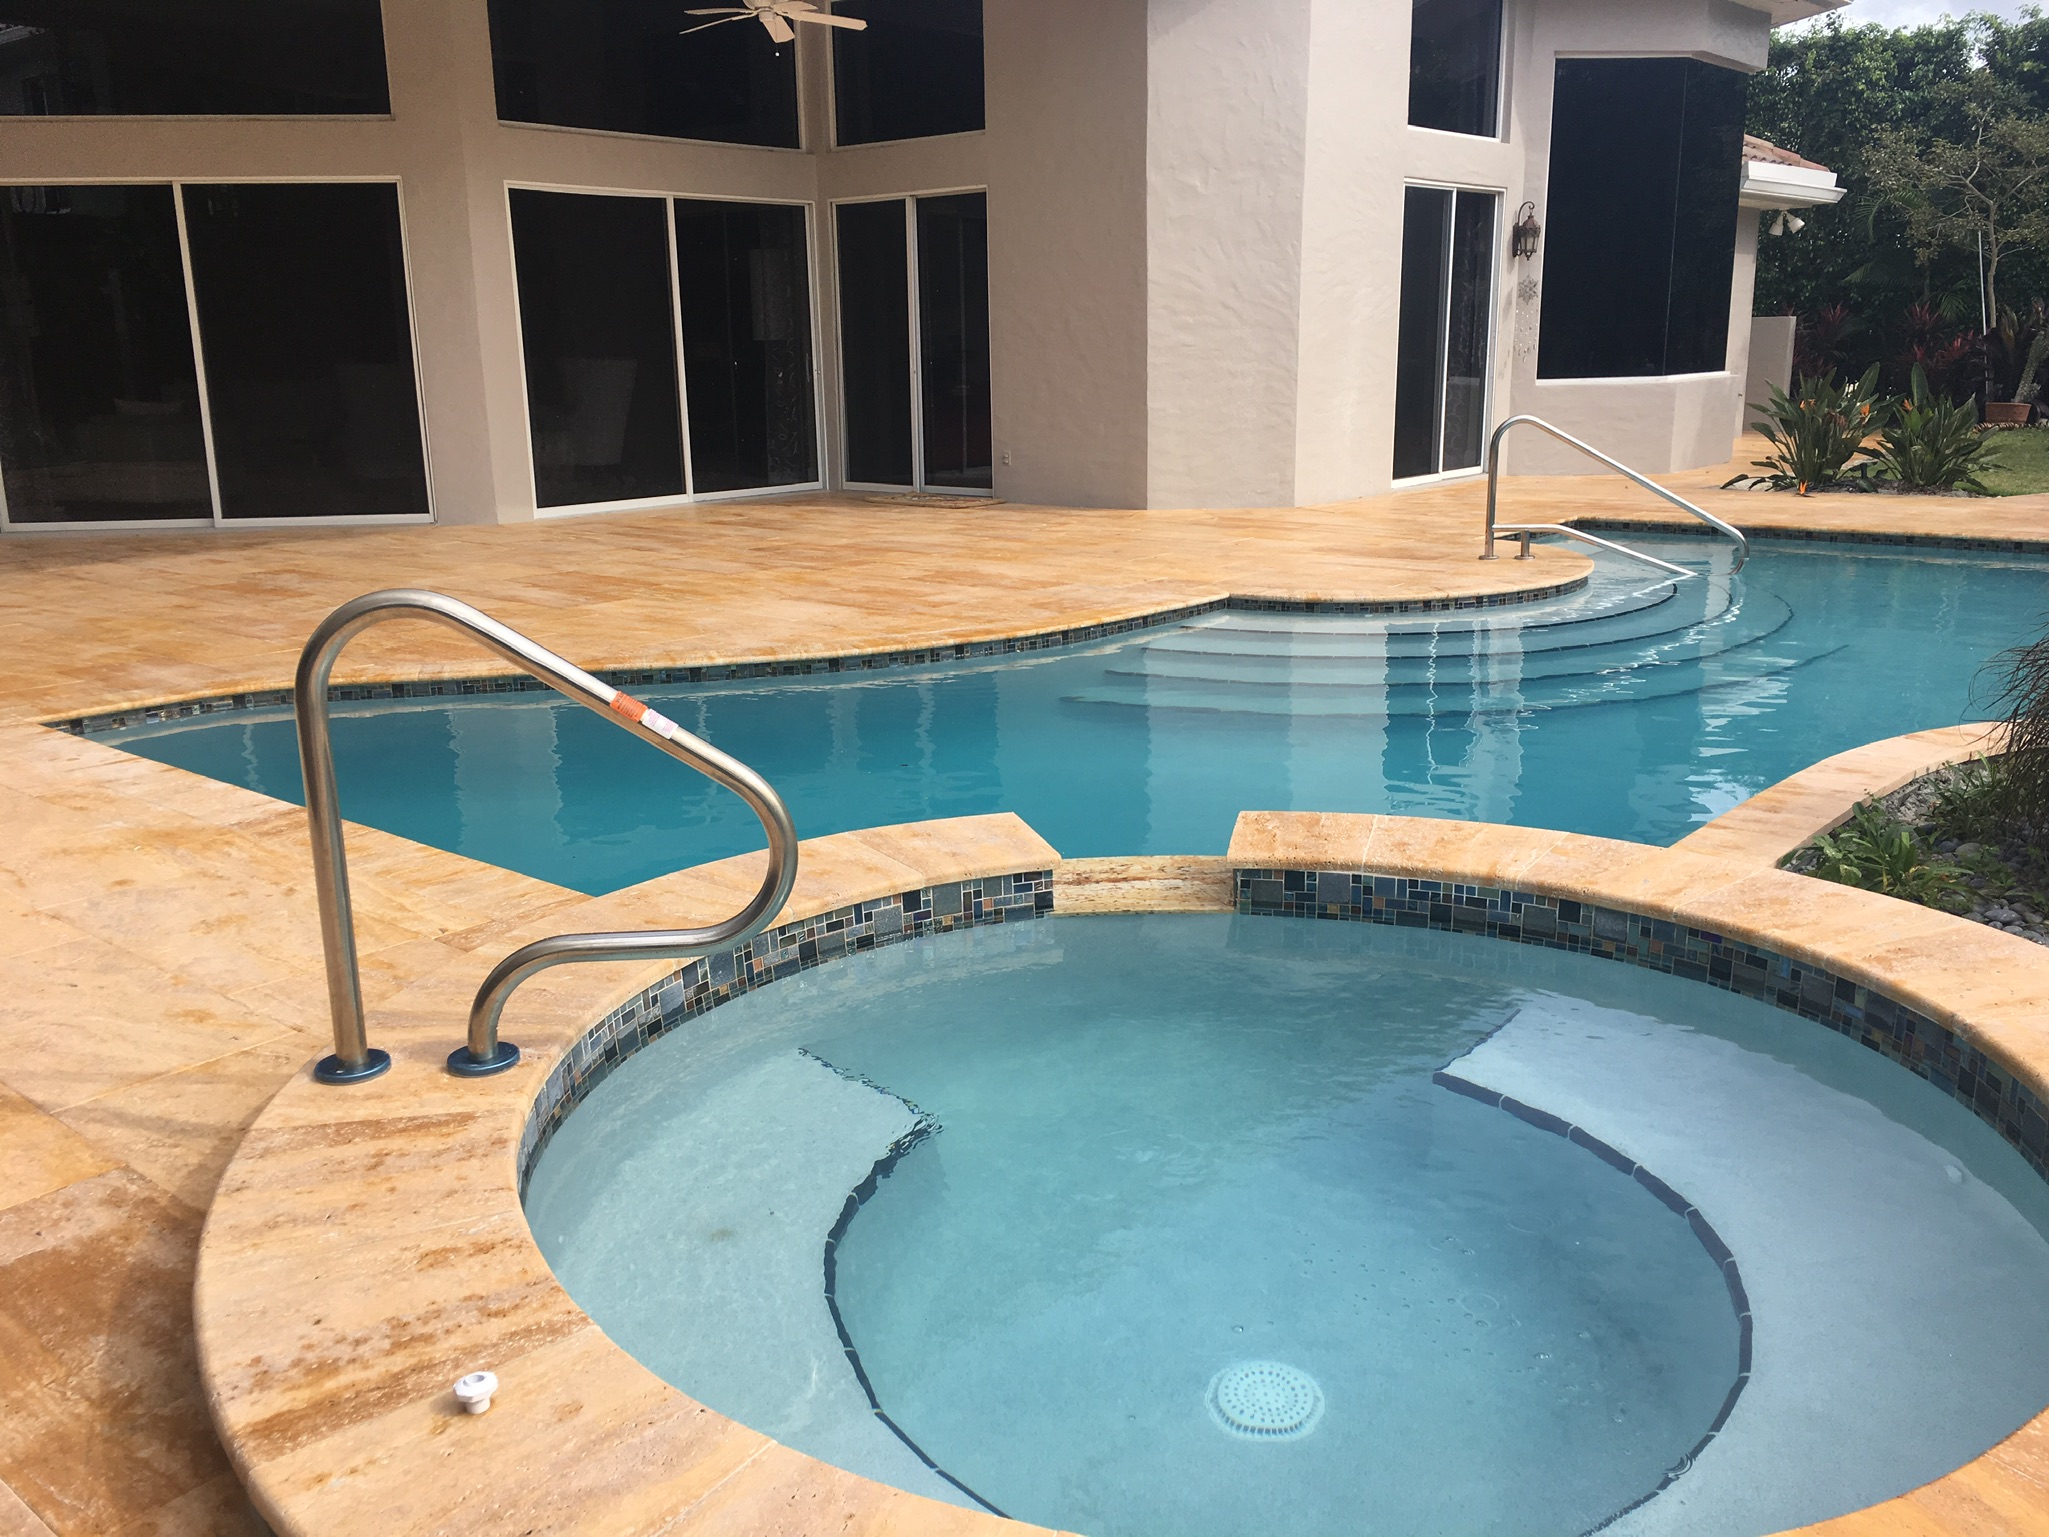 boca raton pool and patio renovation final with spa